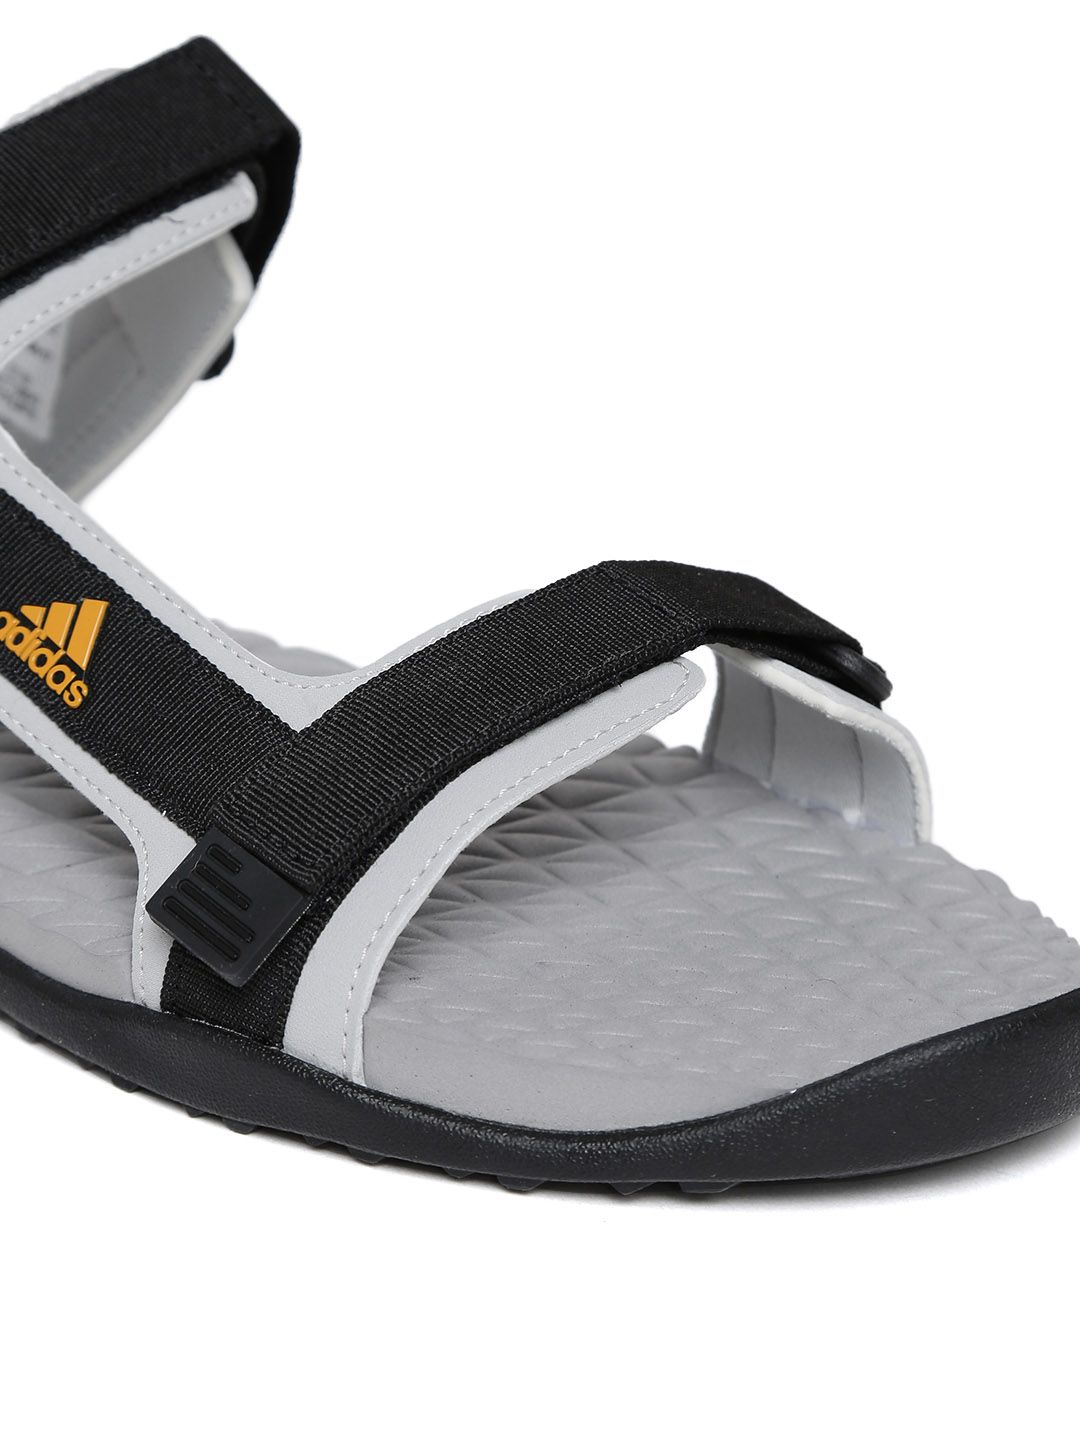 adidas sandals price list